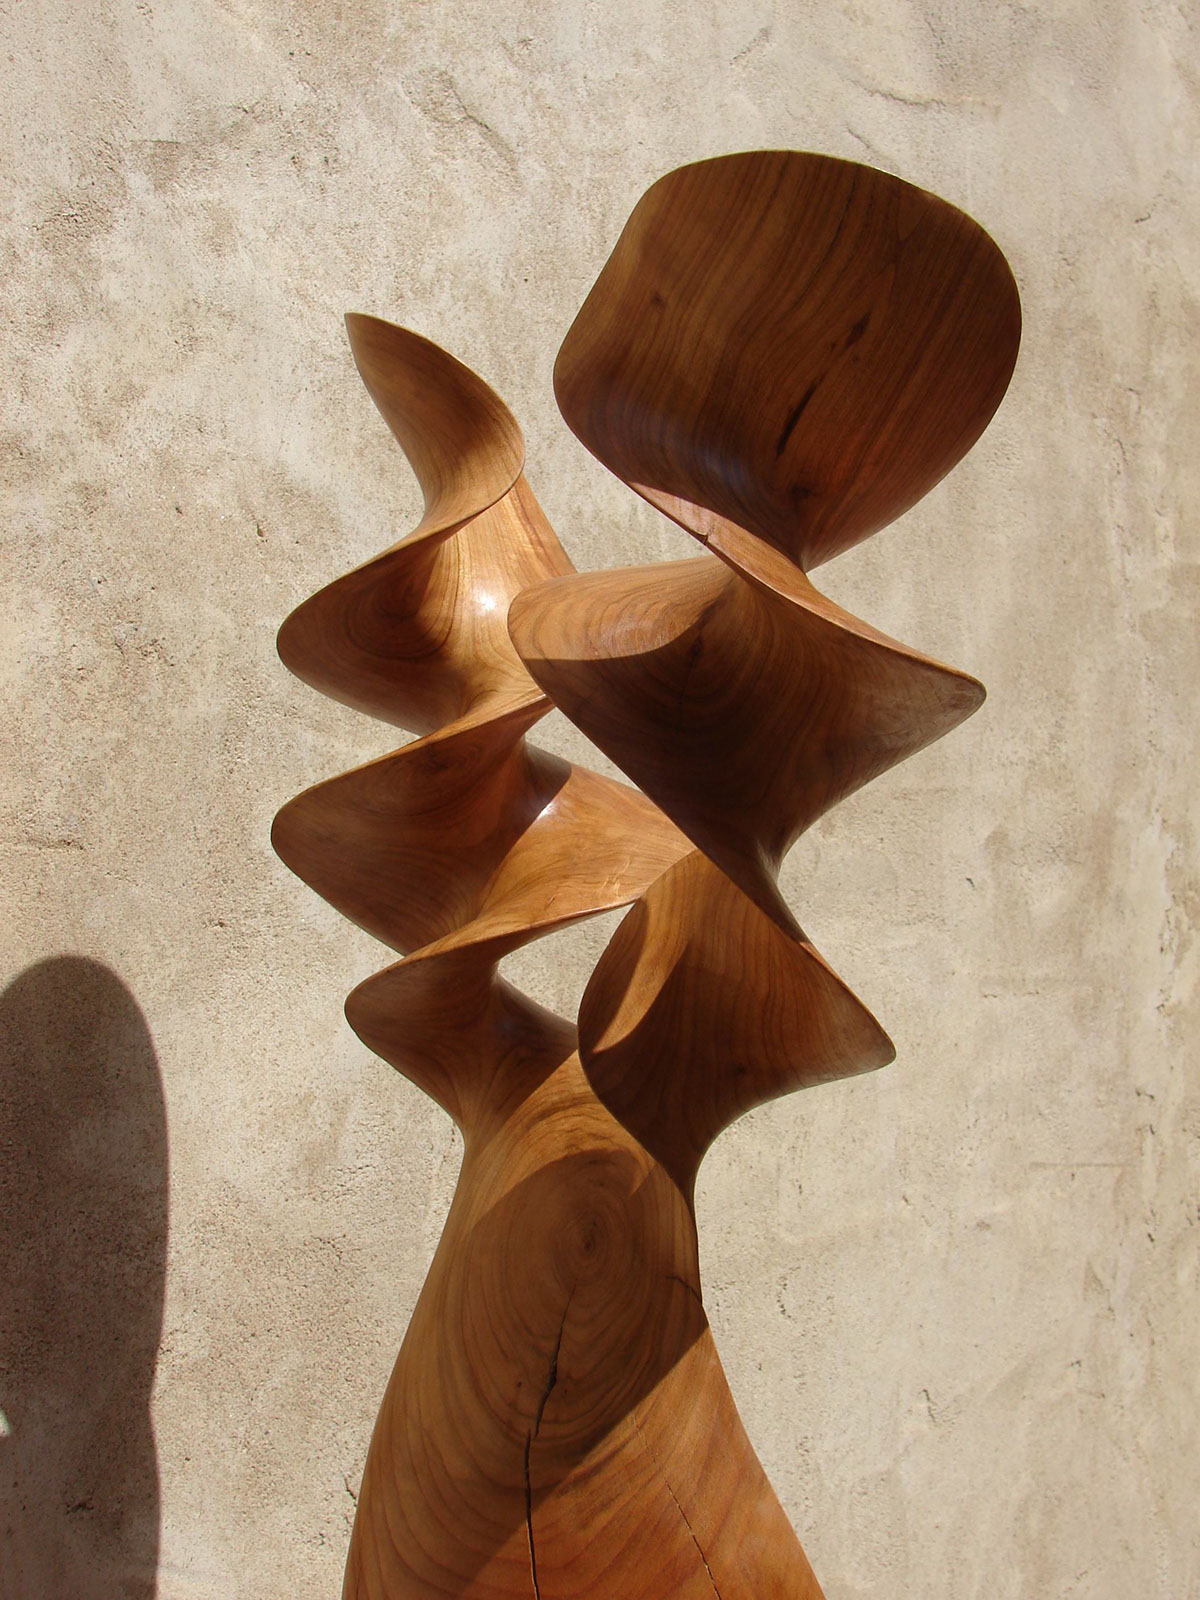 wood wood carving sculpture